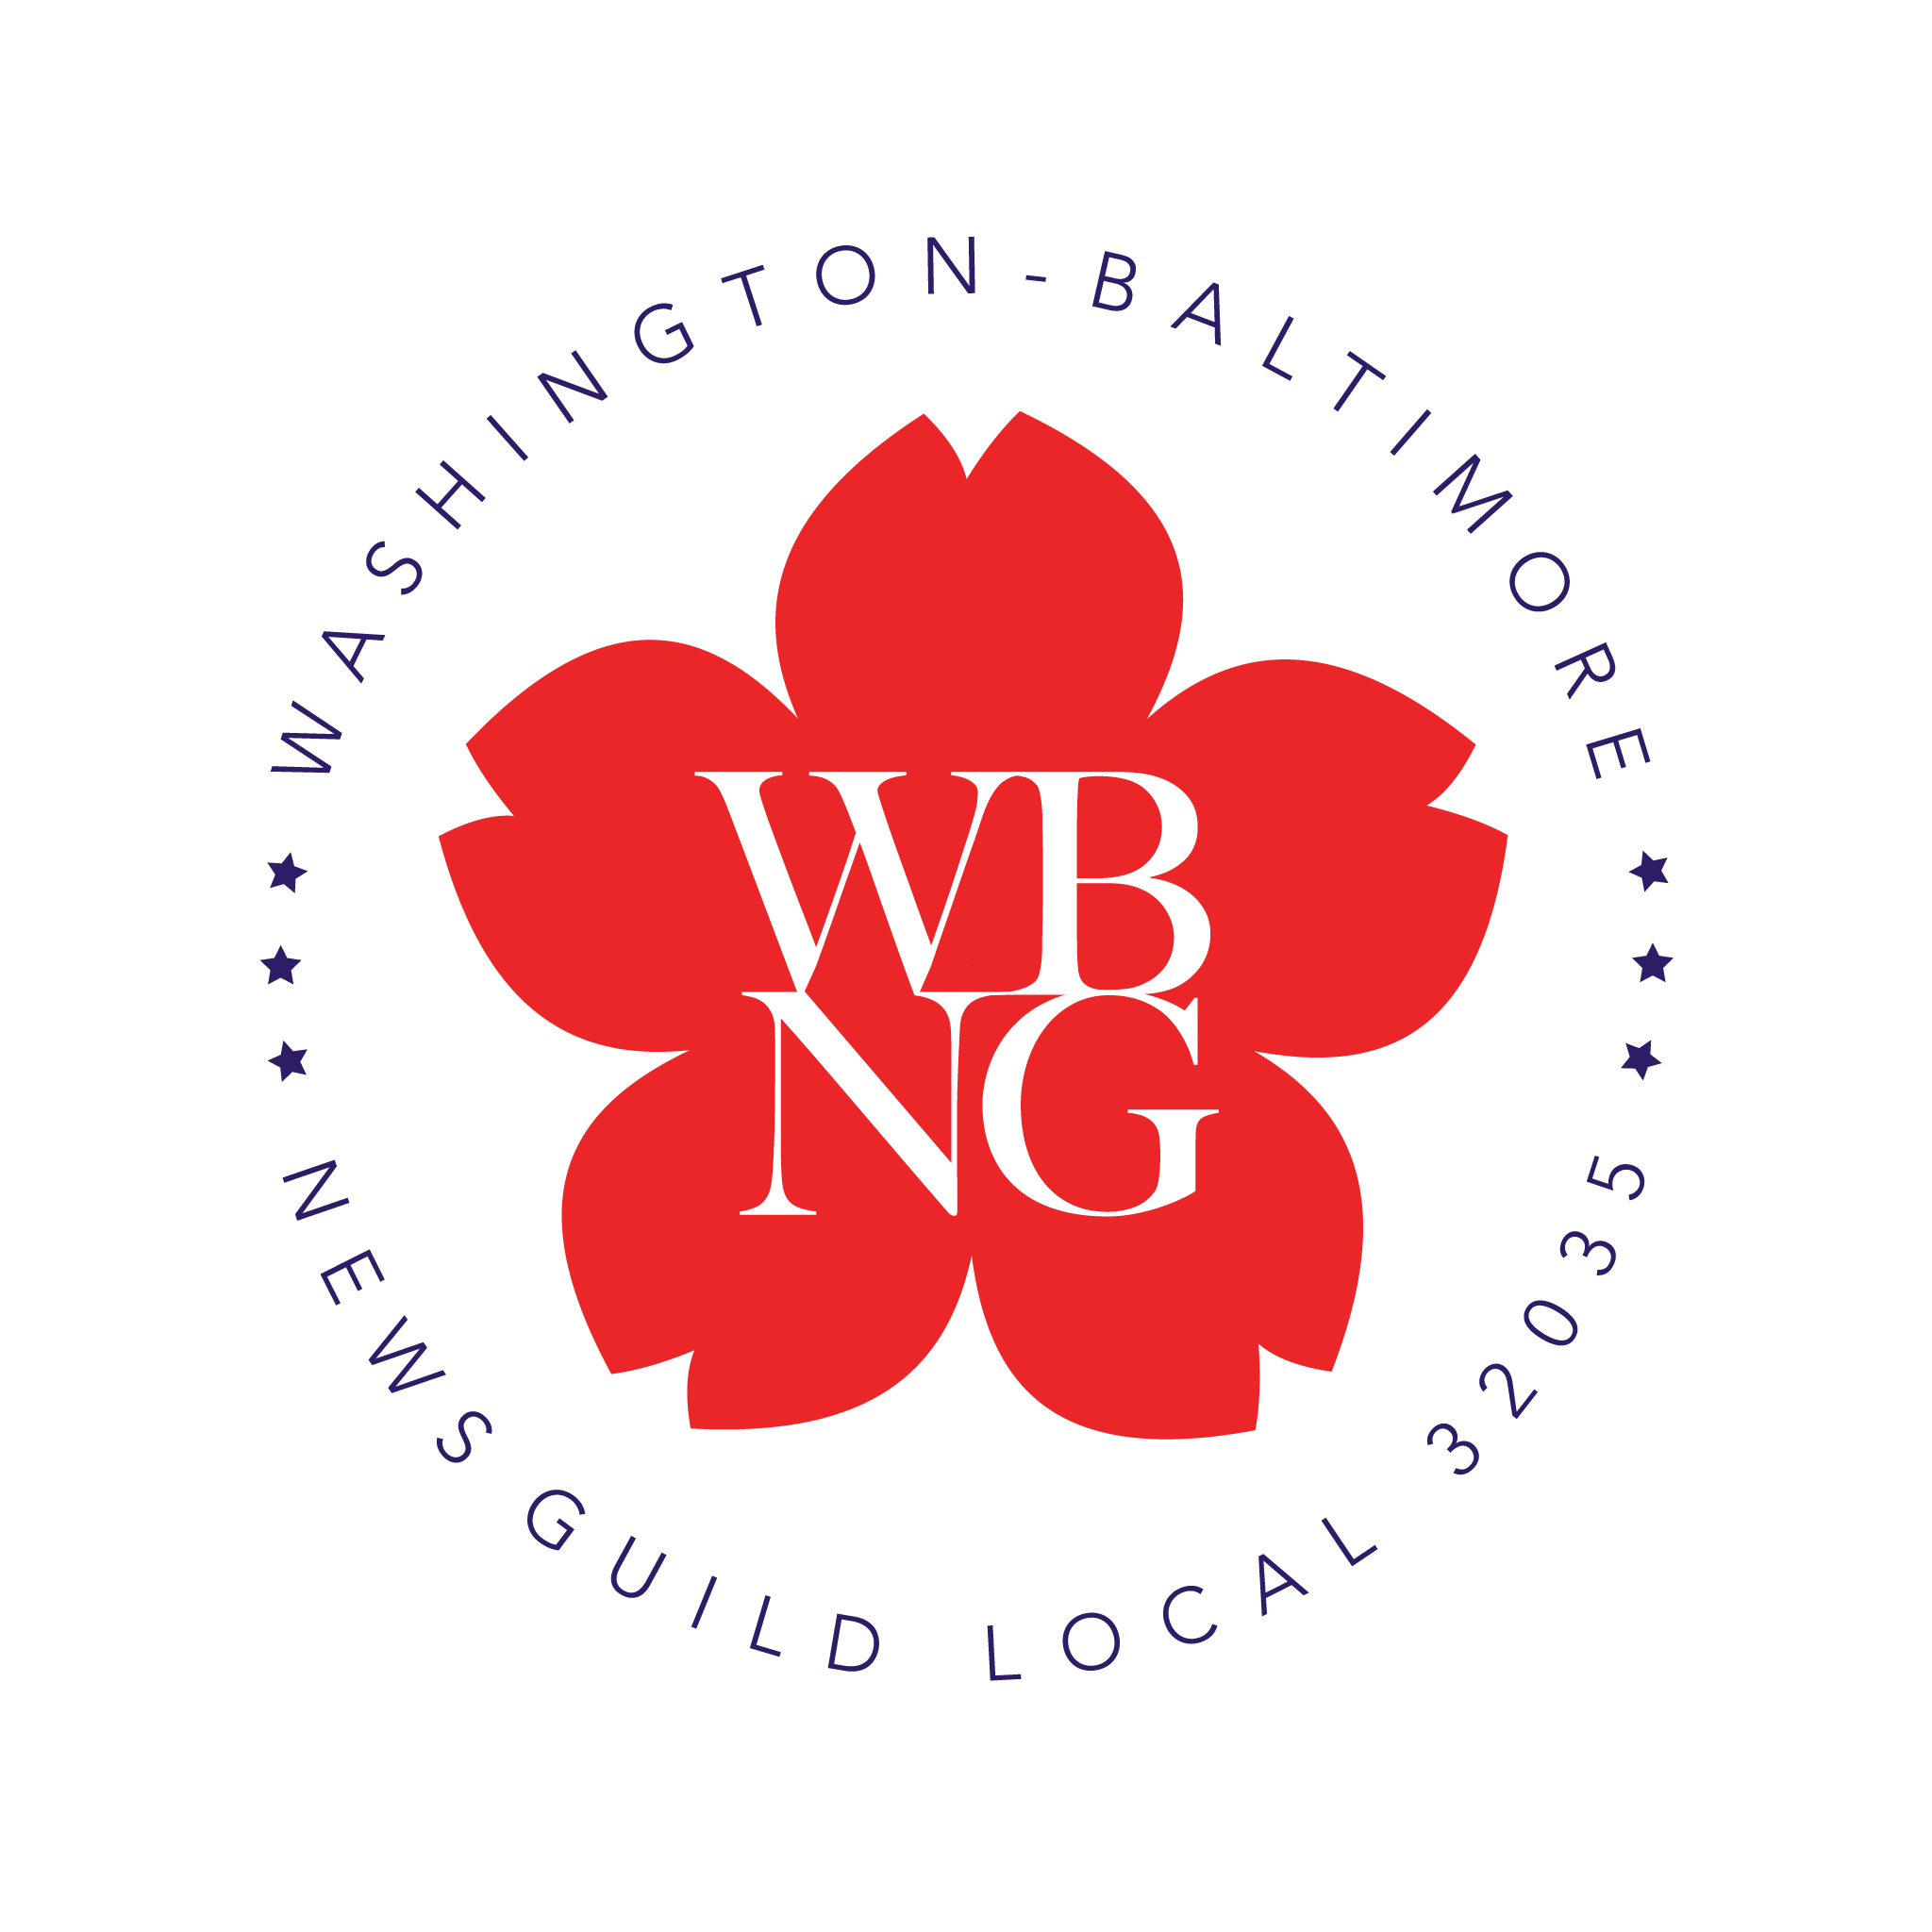 Washington-Baltimore News Guild